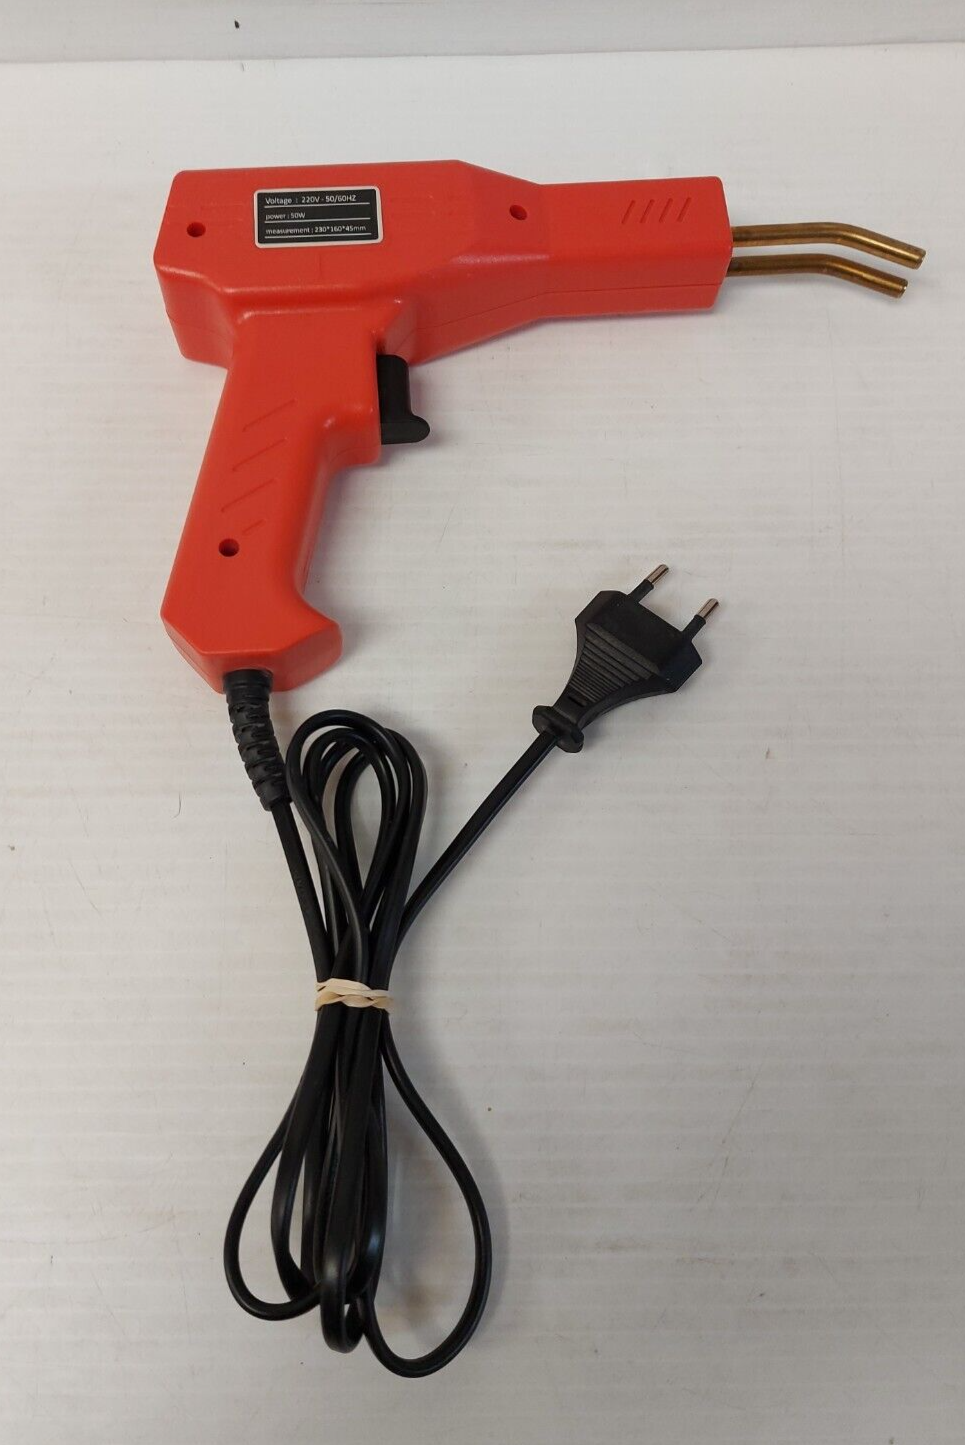 (N81759-3) Unbranded H50 Plastic Welding Gun w/ 220V Plug